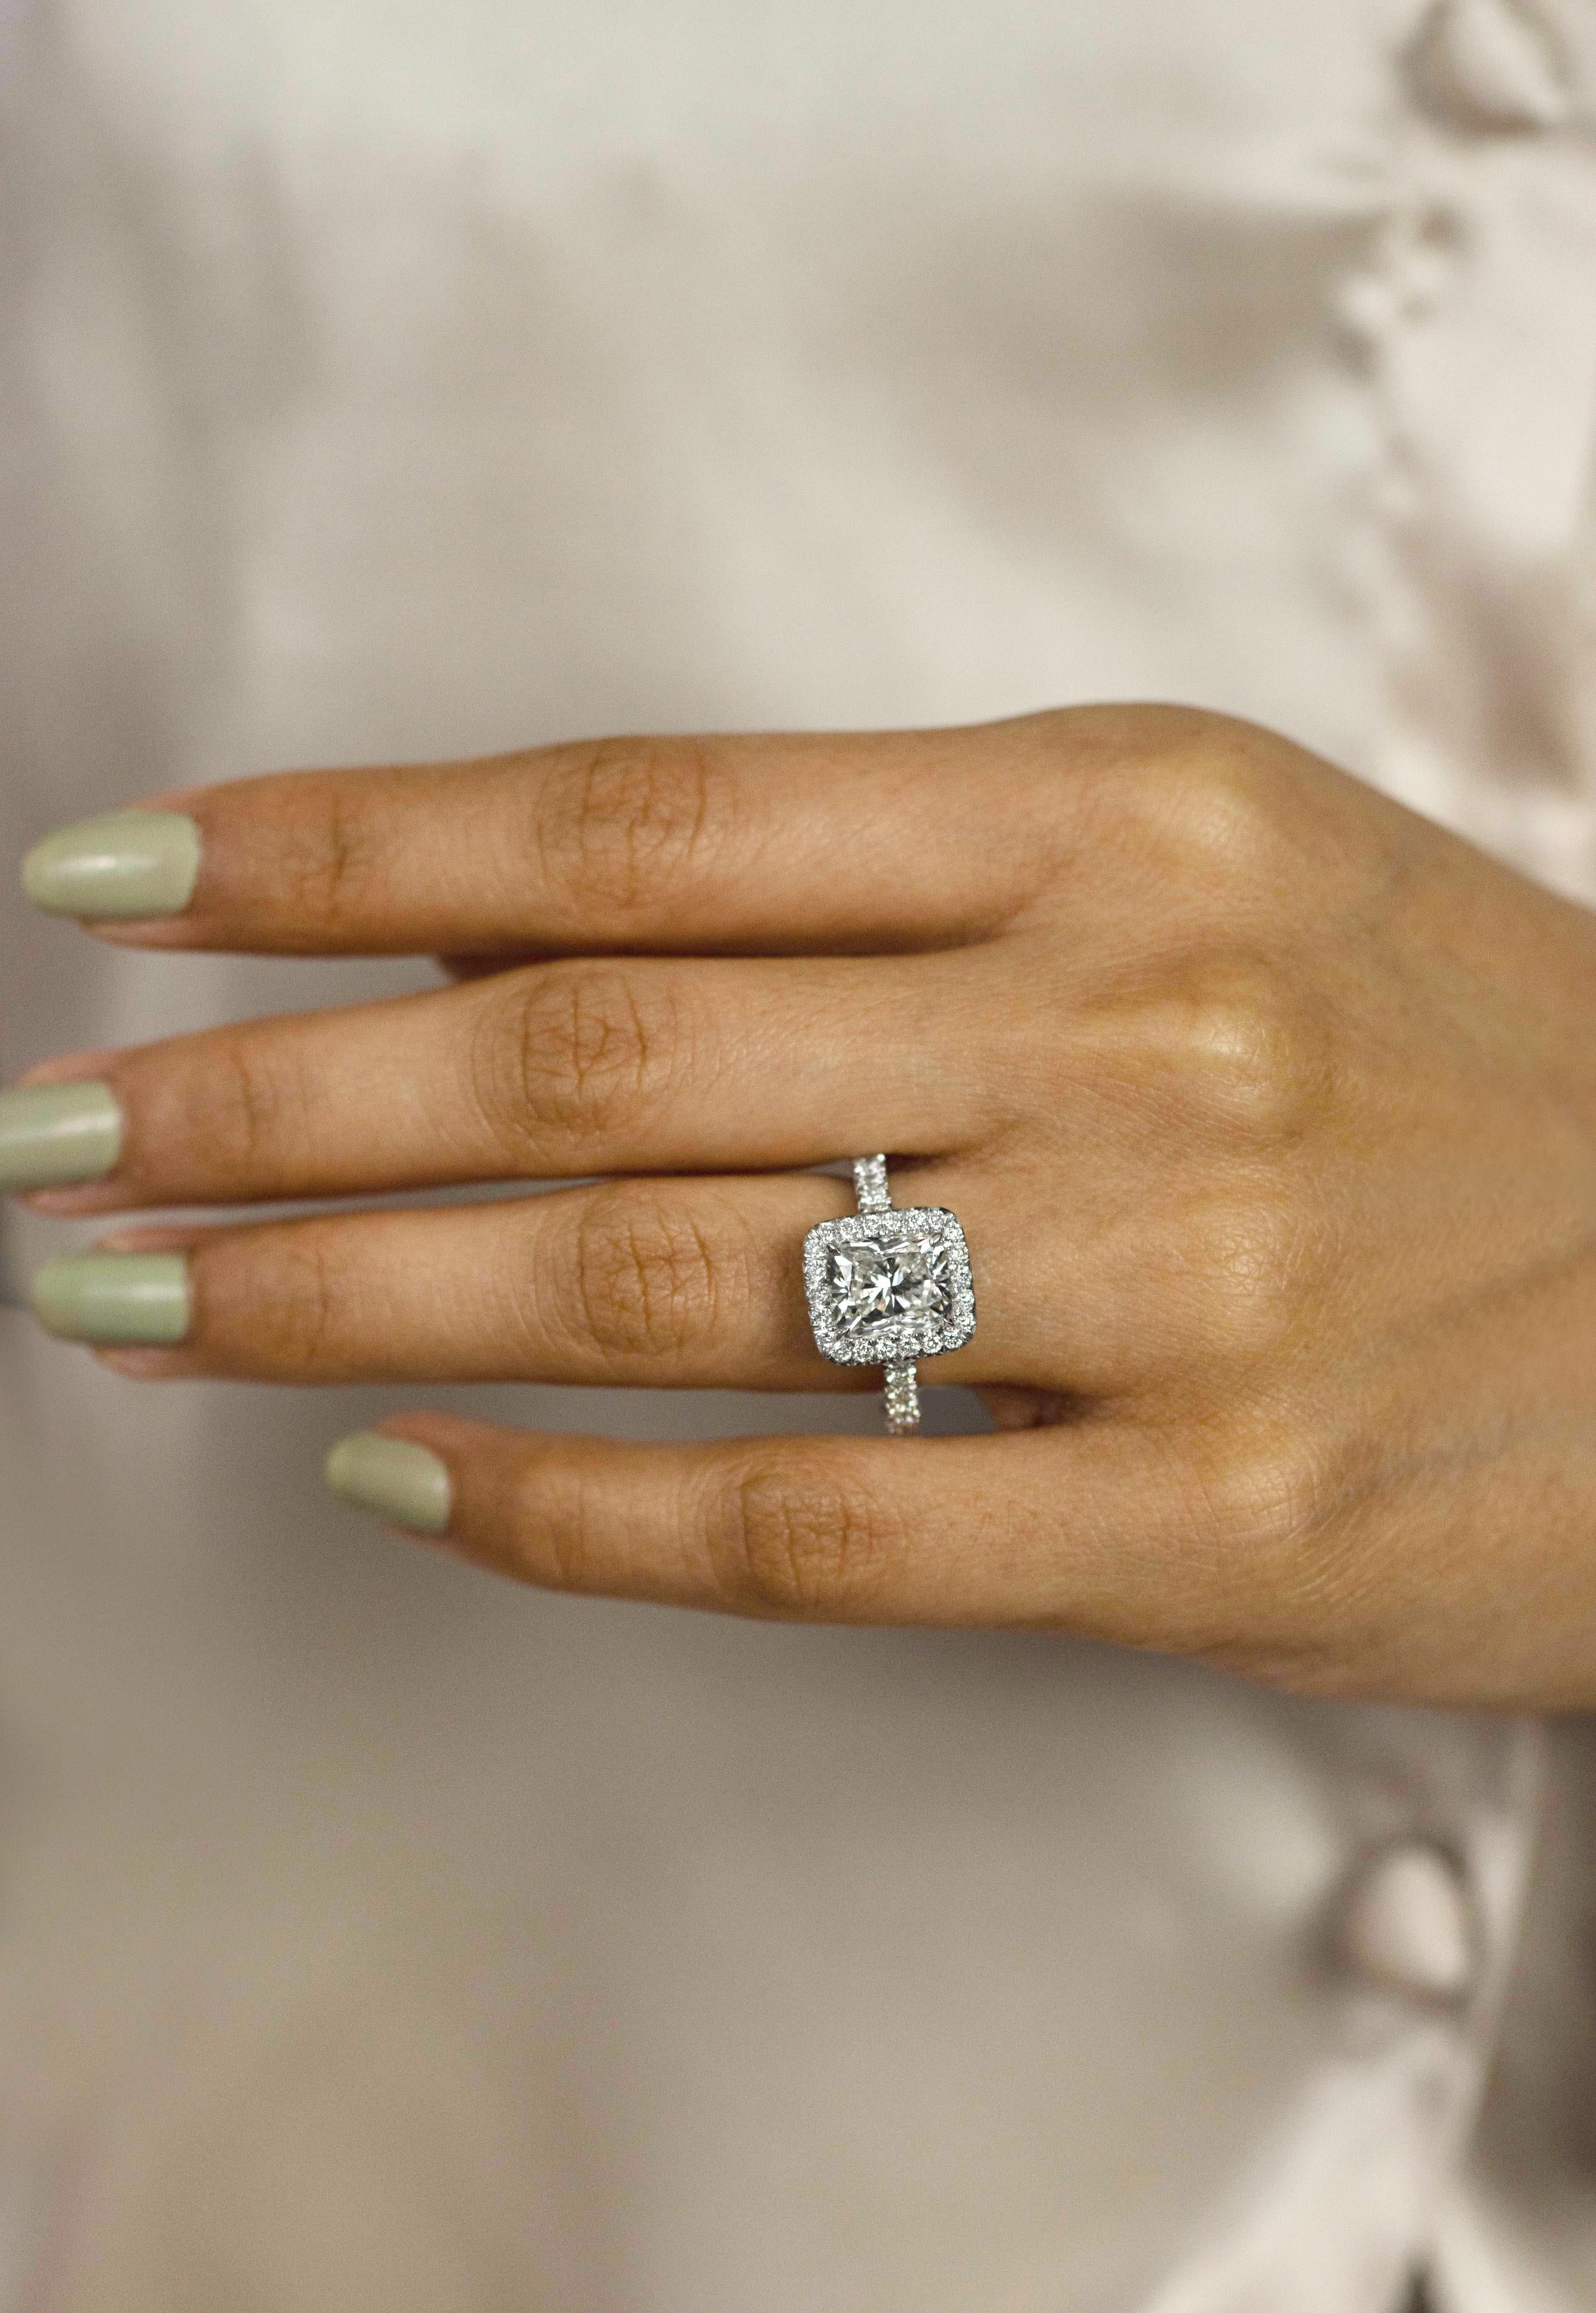 6.5 carat diamond ring